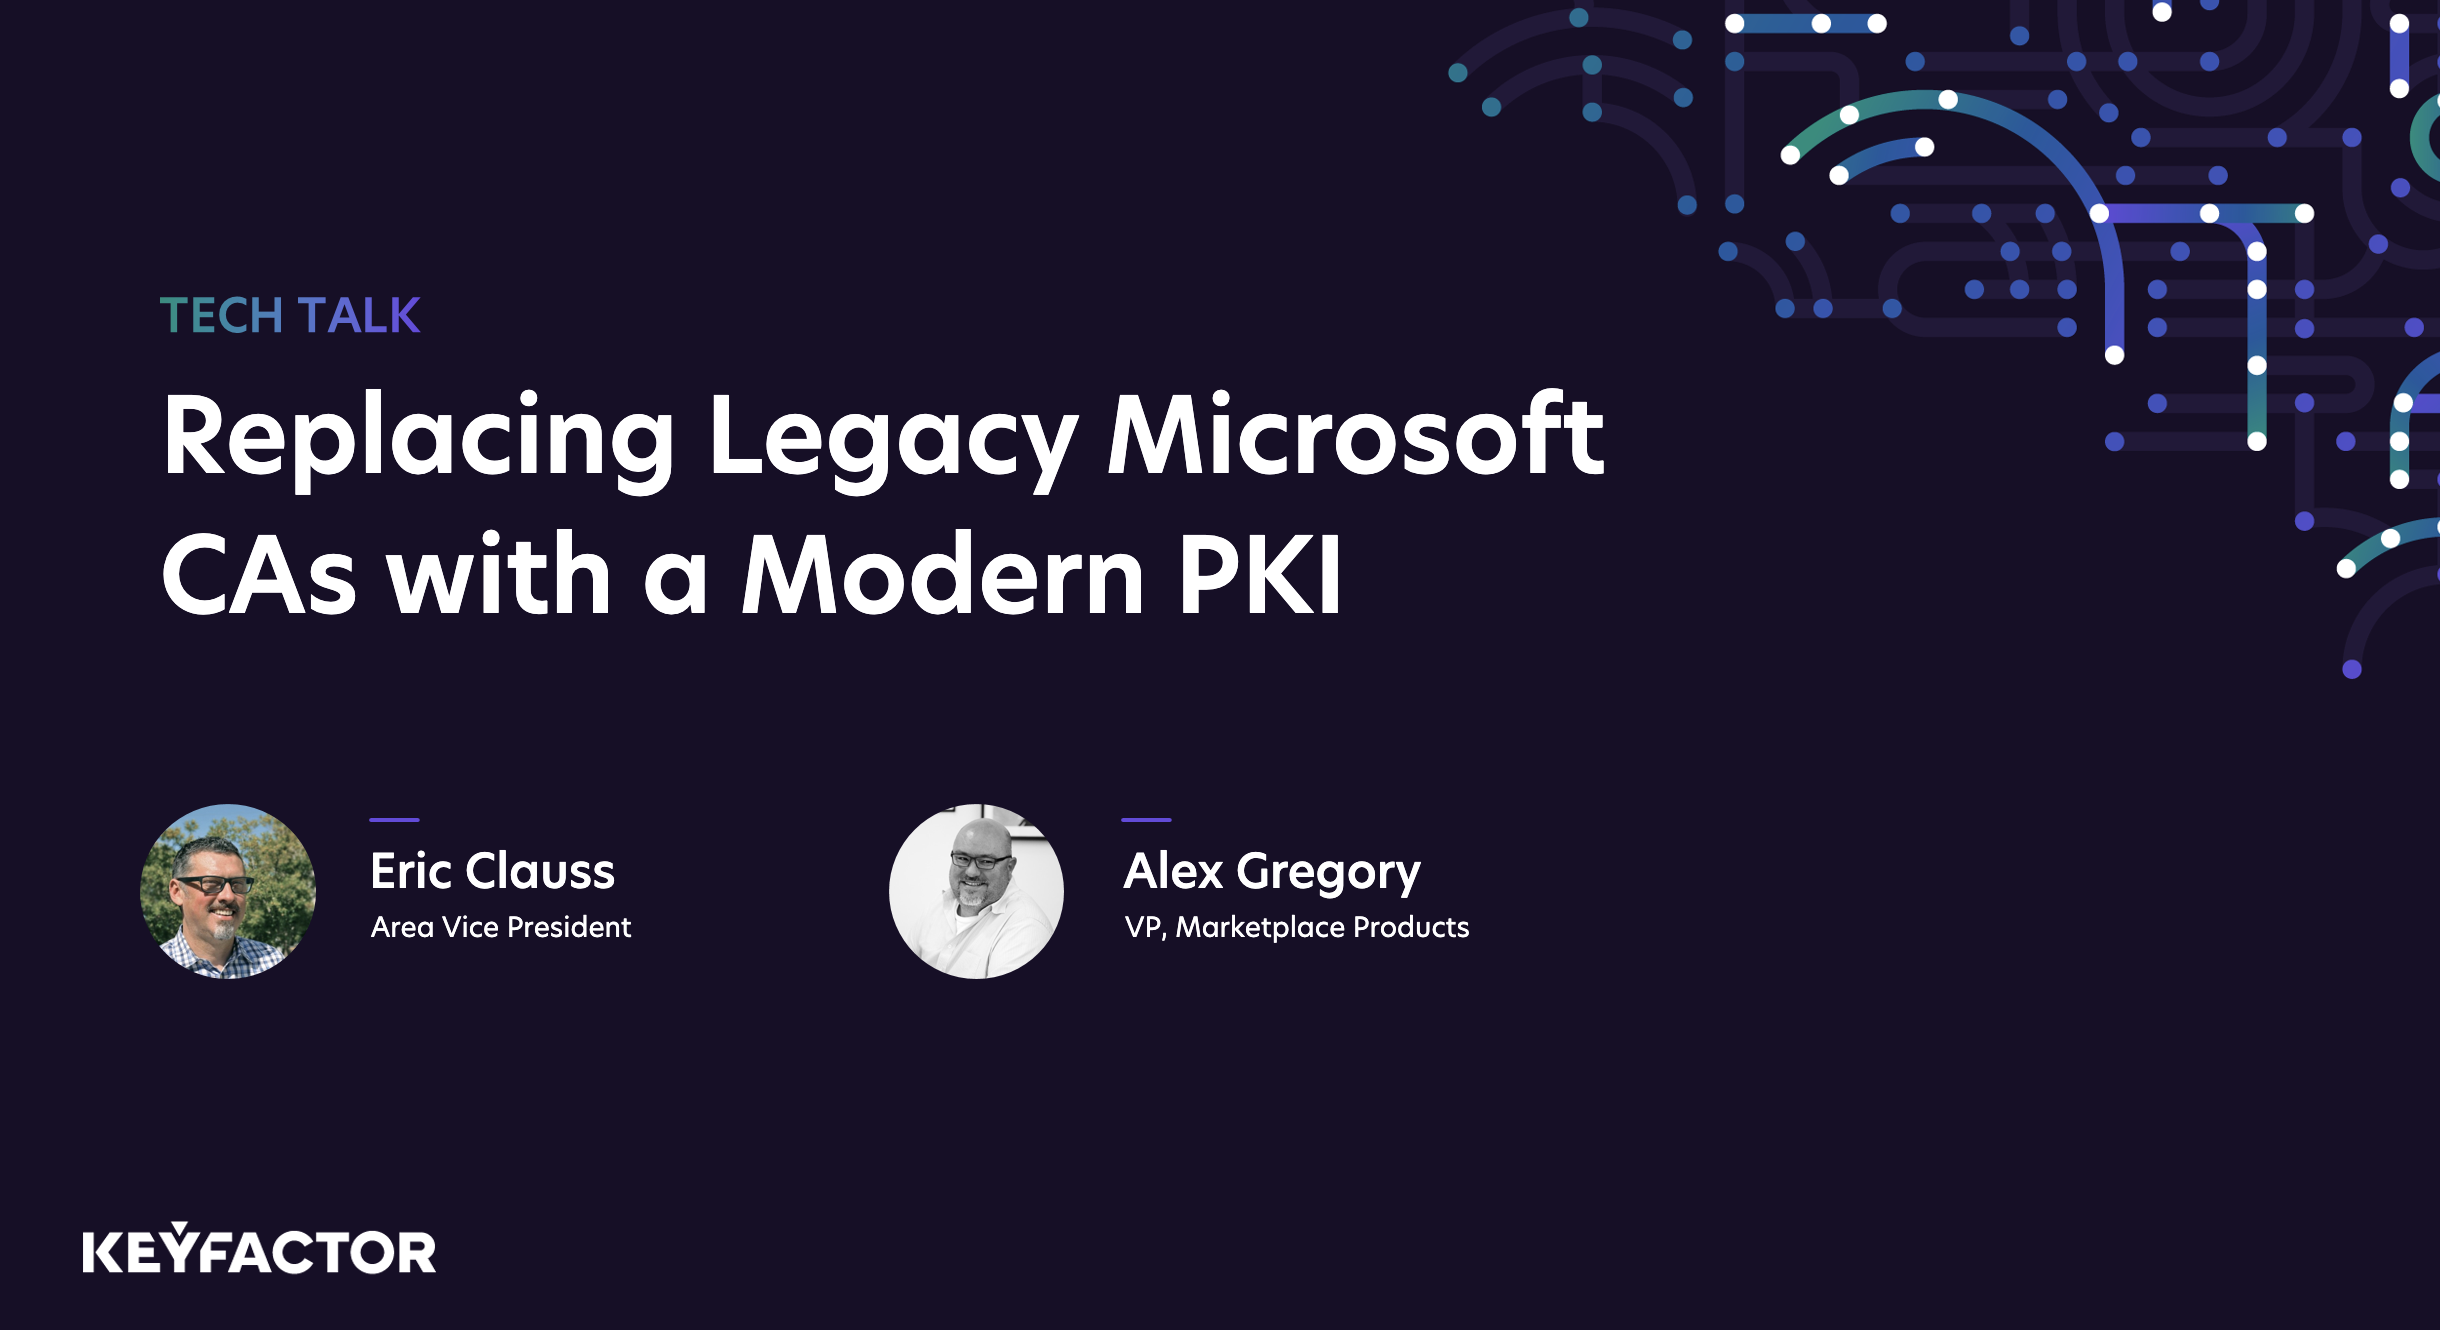 Tech Talk: Replacing Legacy Microsoft CAs with a Modern PKI